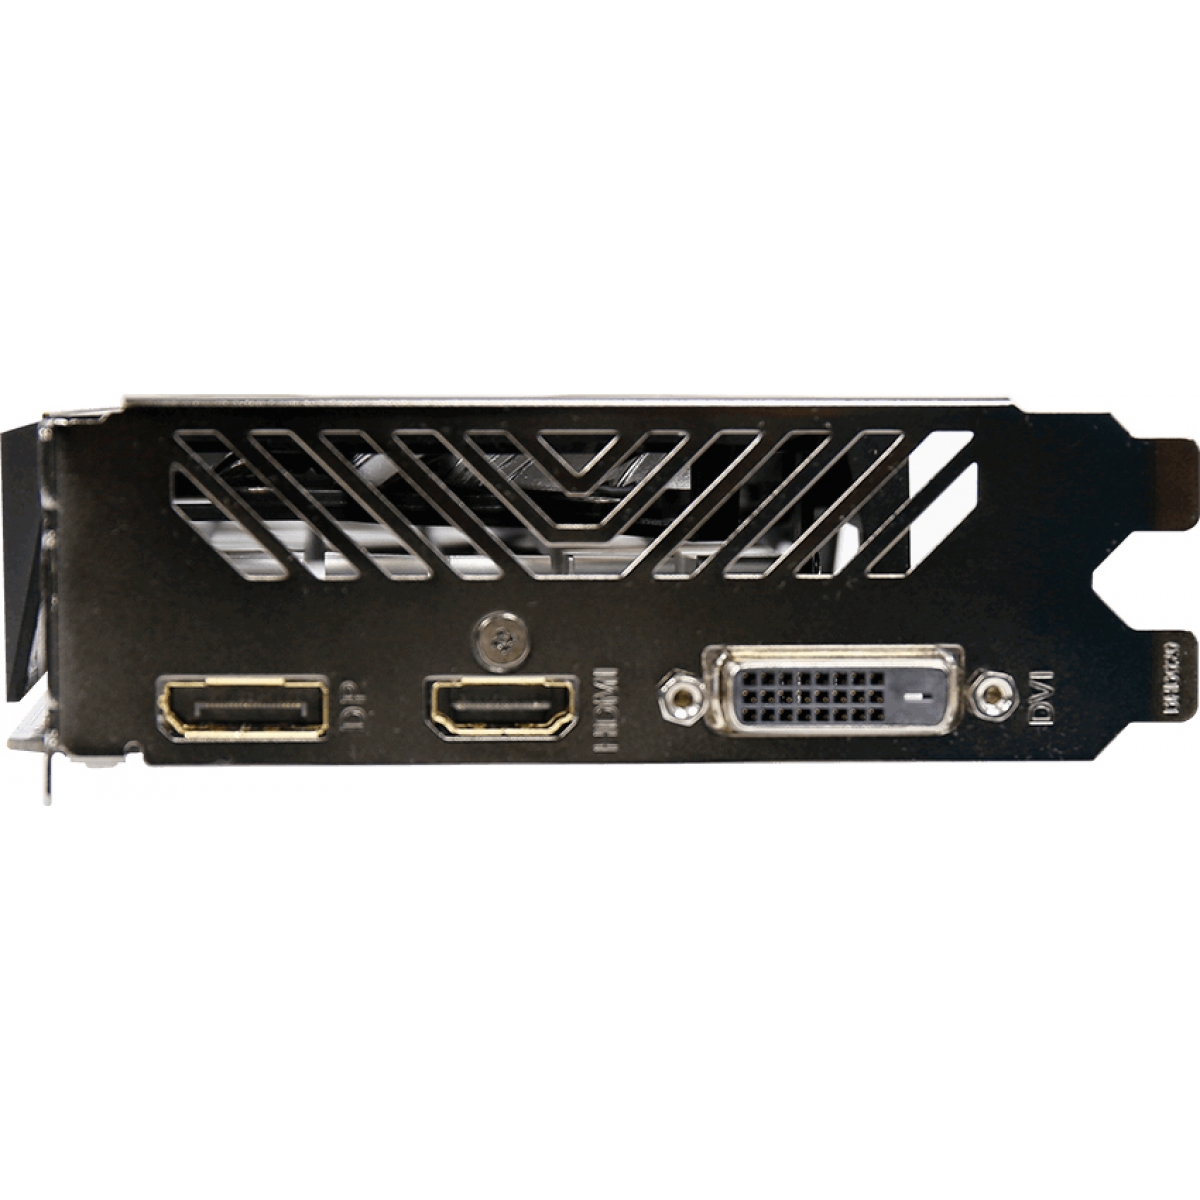 Placa de Vídeo Gigabyte GeForce GTX 1050 OC Dual, 3GB GDDR5, 96Bit